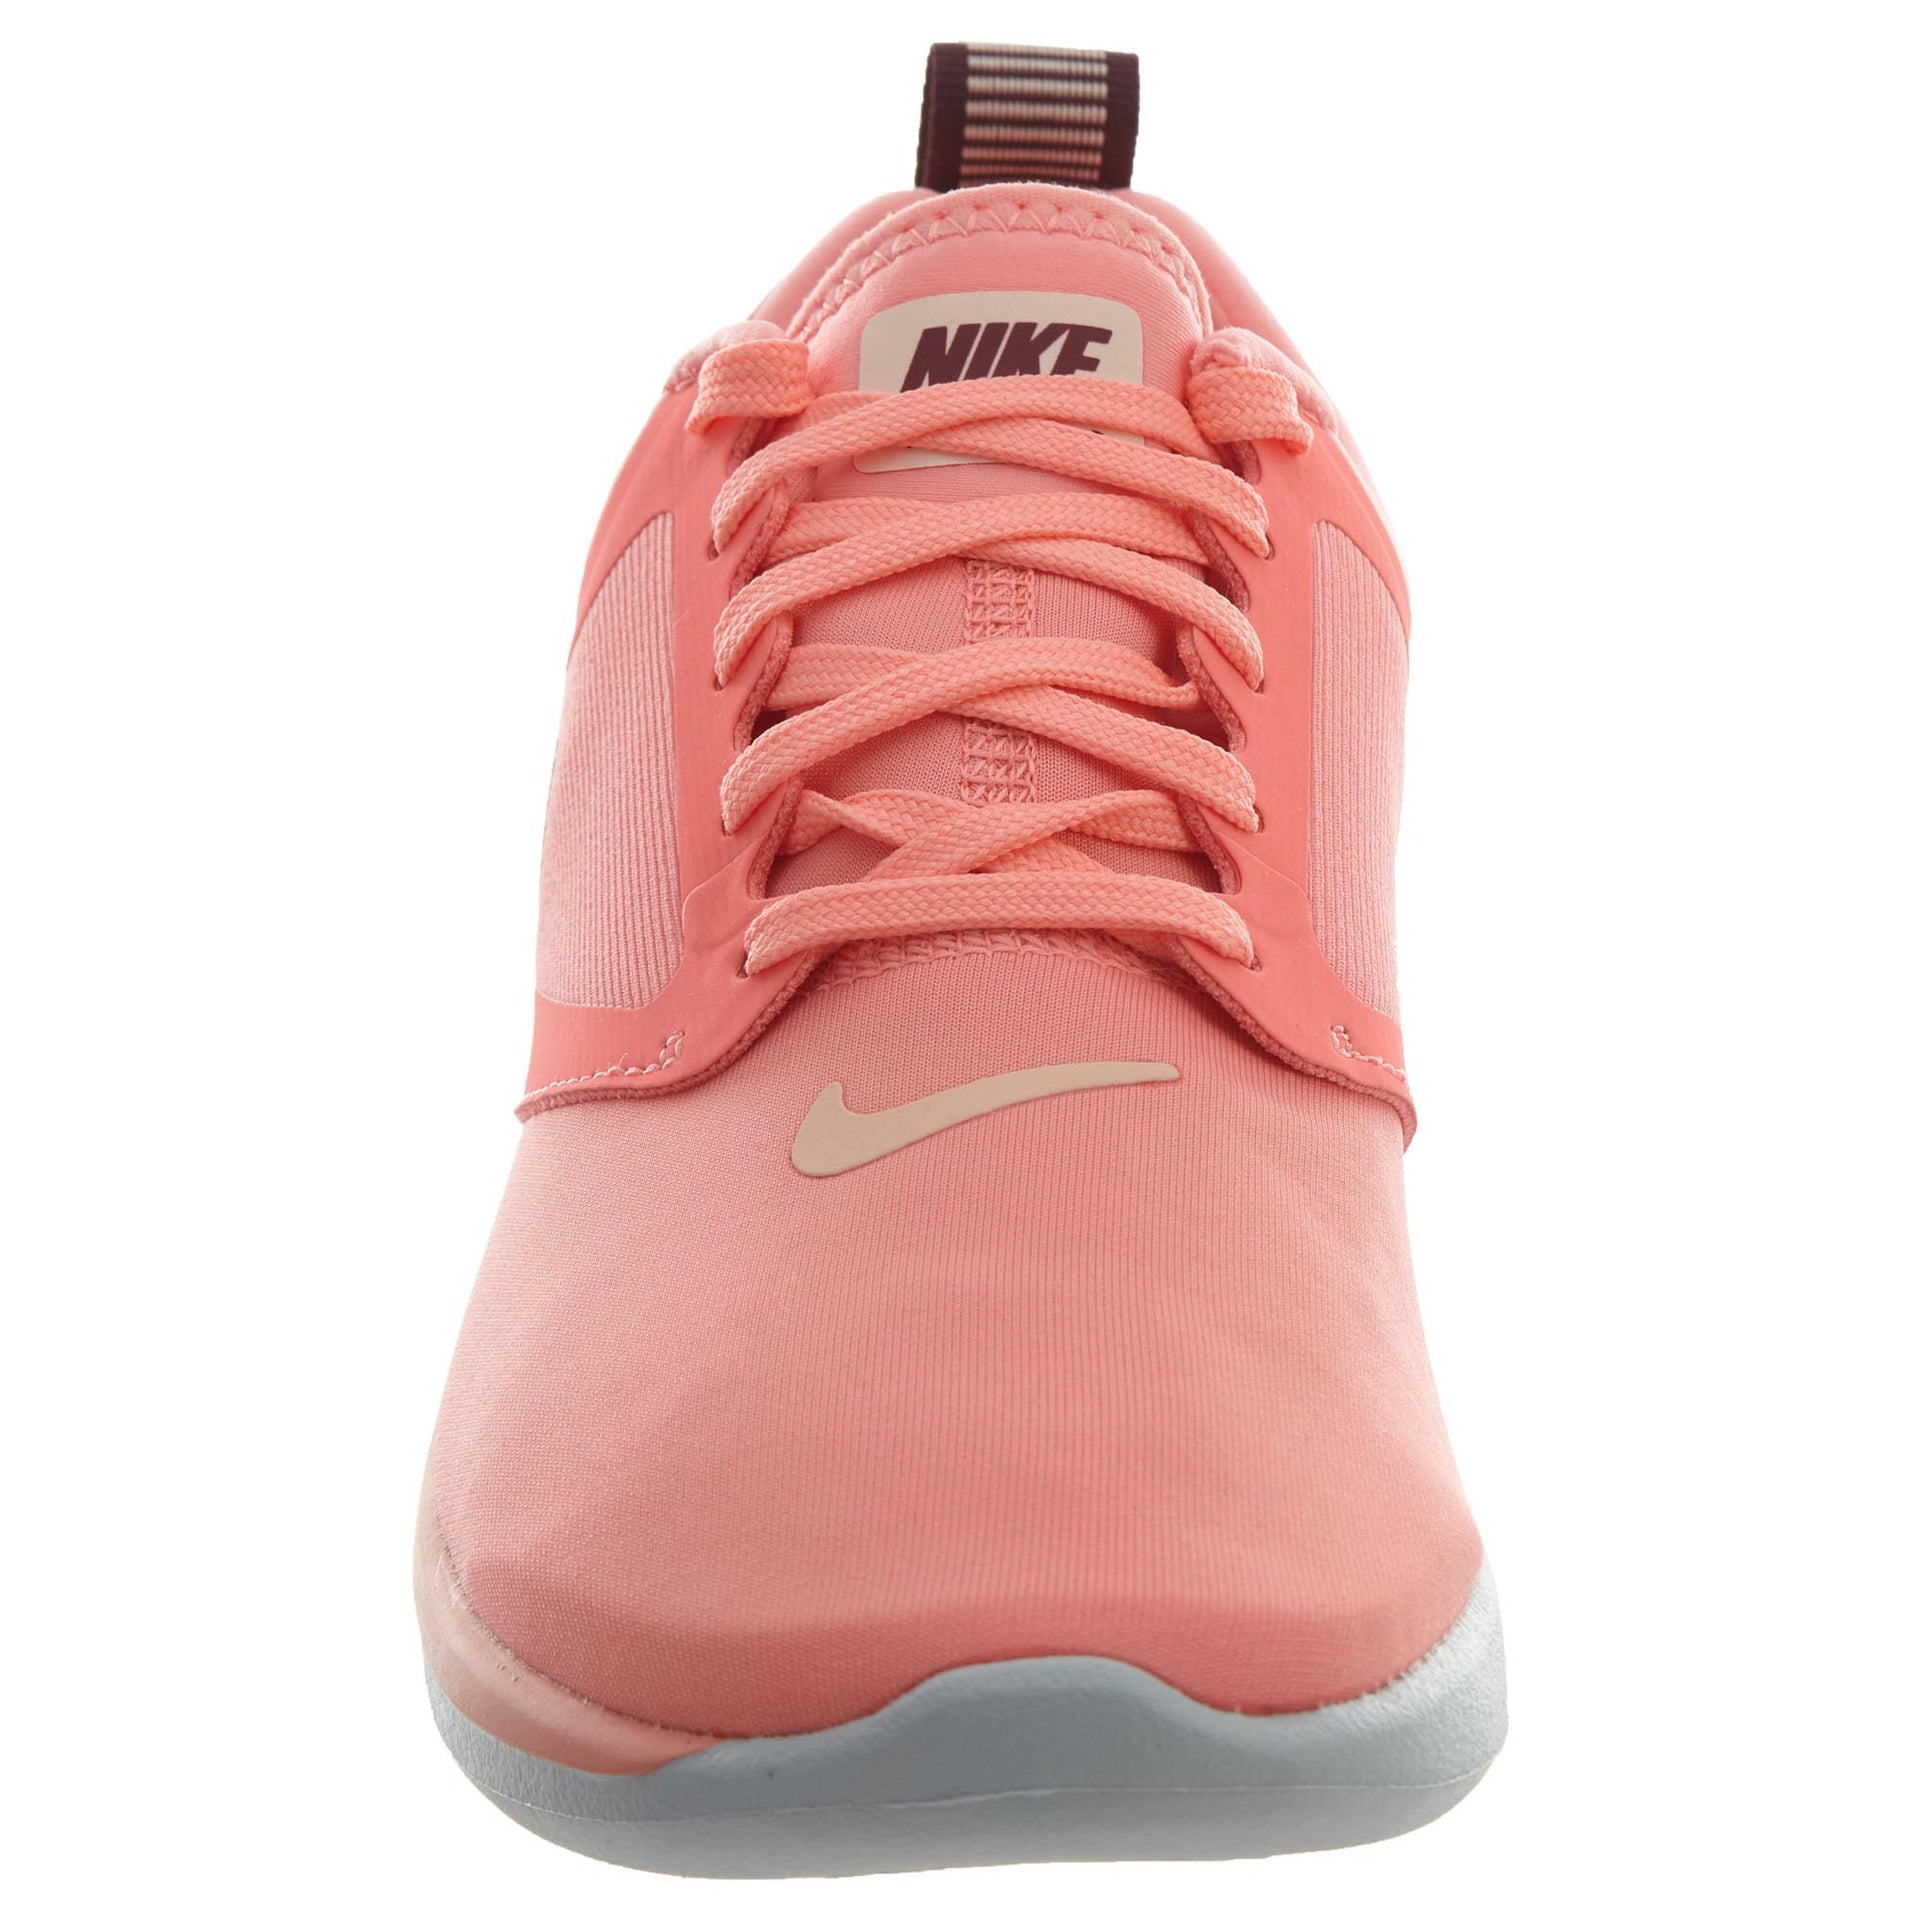 Nike Lunarsolo Lt Atomic Pink Crimson Tint (Women's)